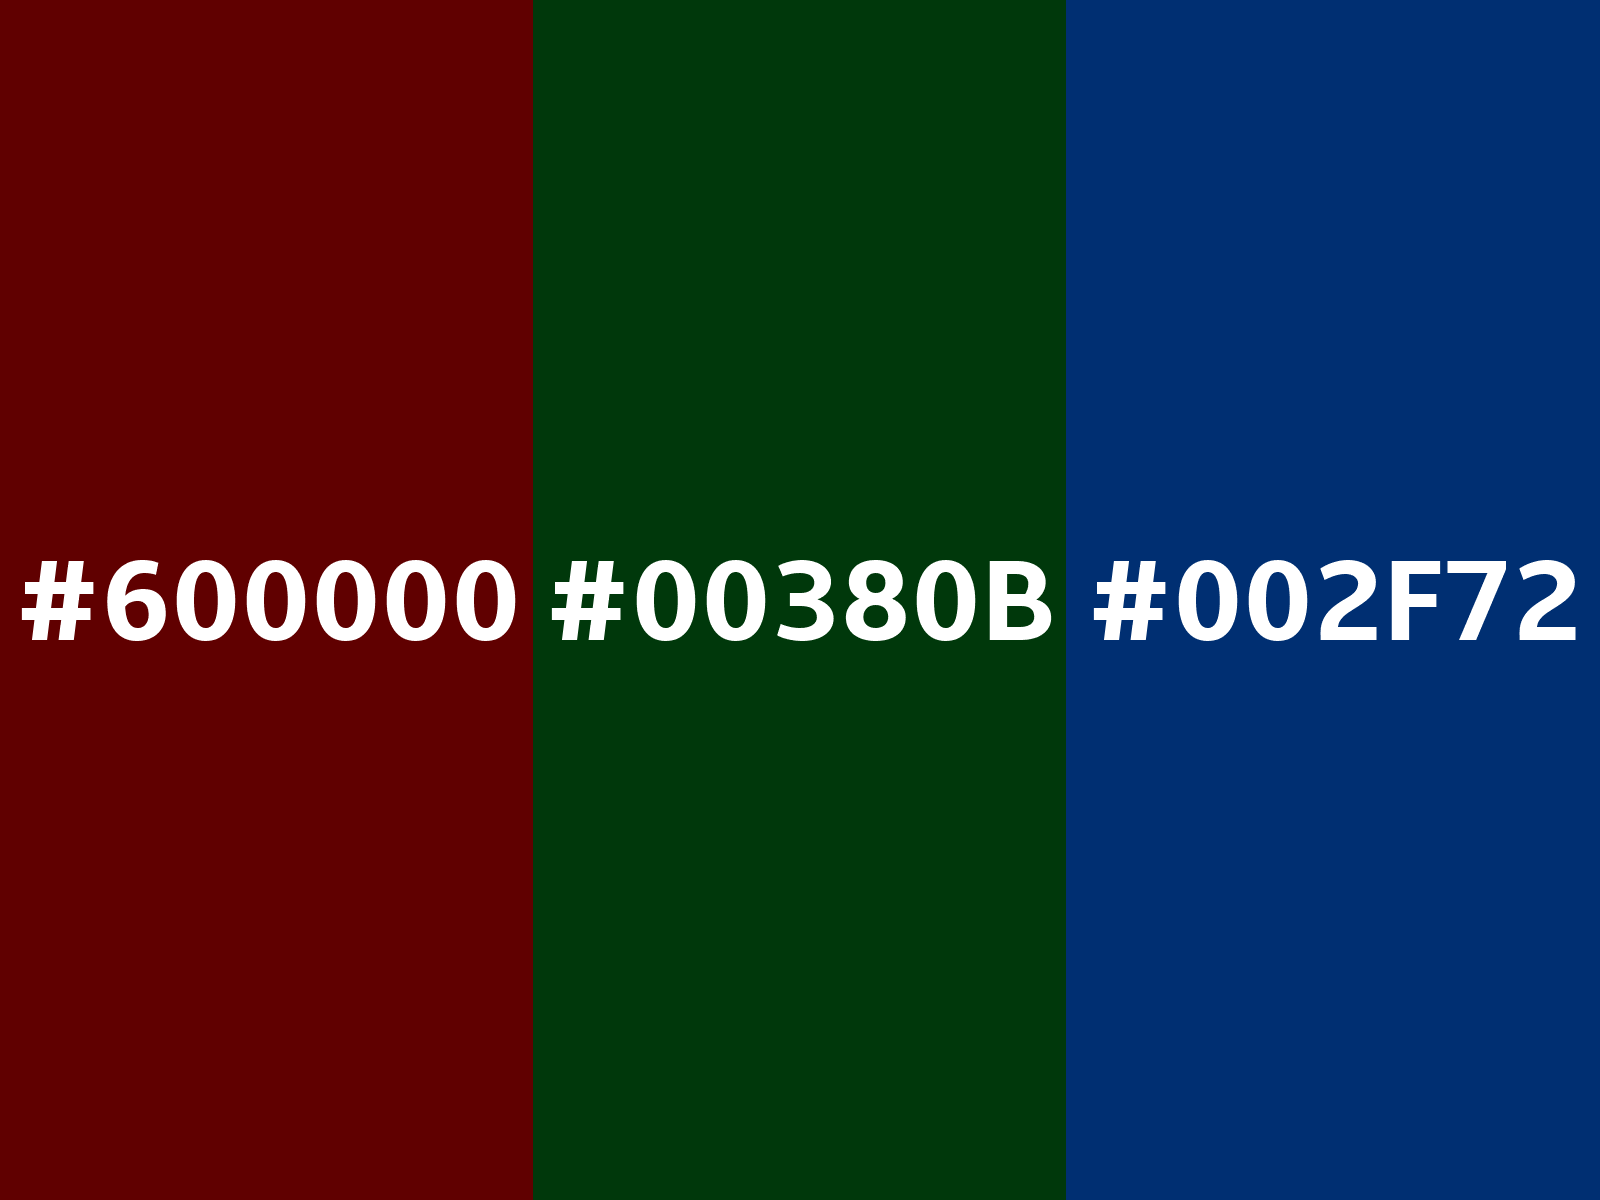 7 999 929 33 89. 00ff00 цвет. Ff0000 Color. Цвет 000. F000000 цвет.